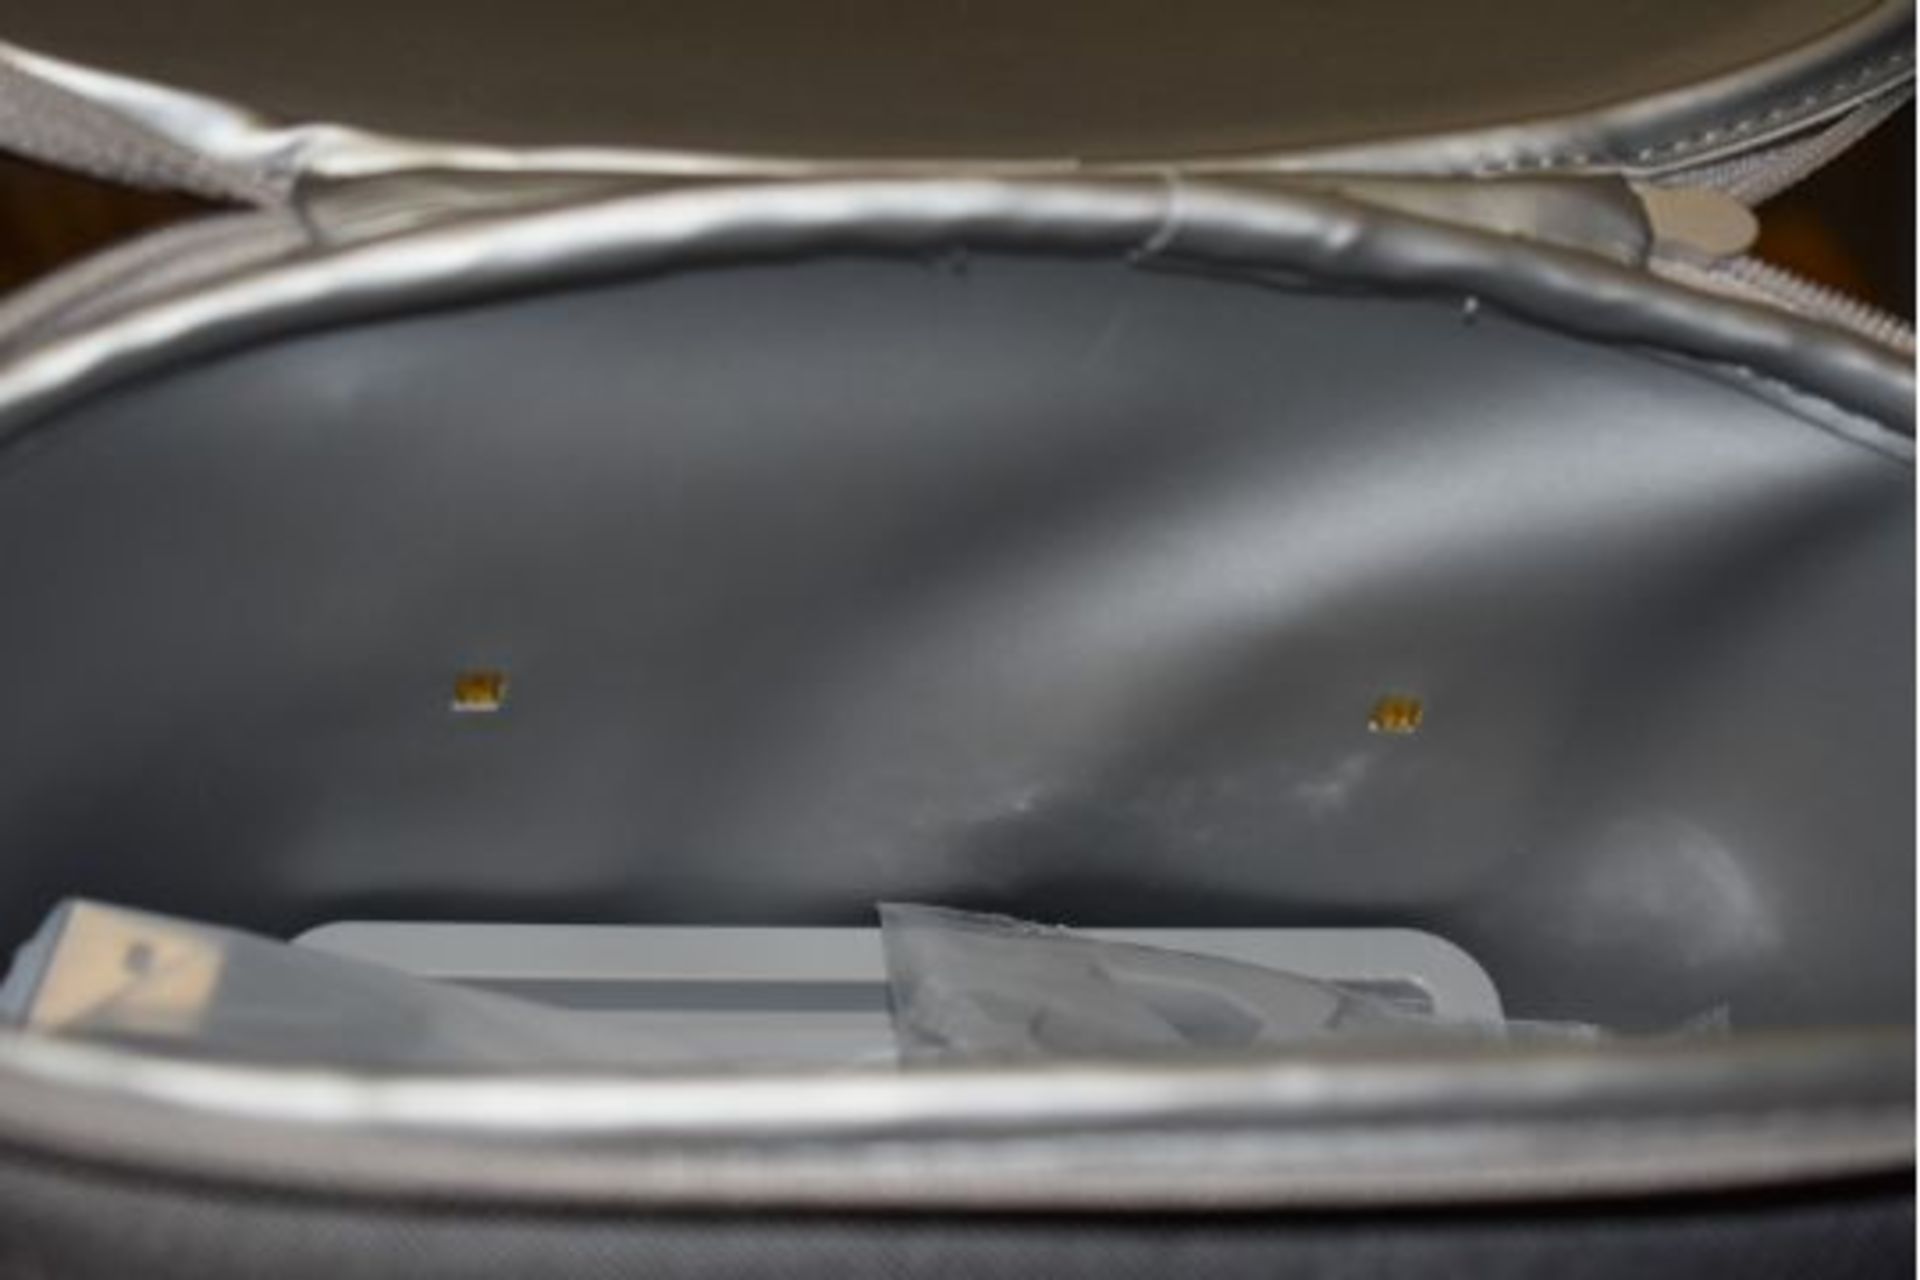 1 x Homedics UV Clean Portable Sanitiser Bag - Kills Upto 99.9% of Bacteria & Viruses in Just 60 - Image 12 of 24